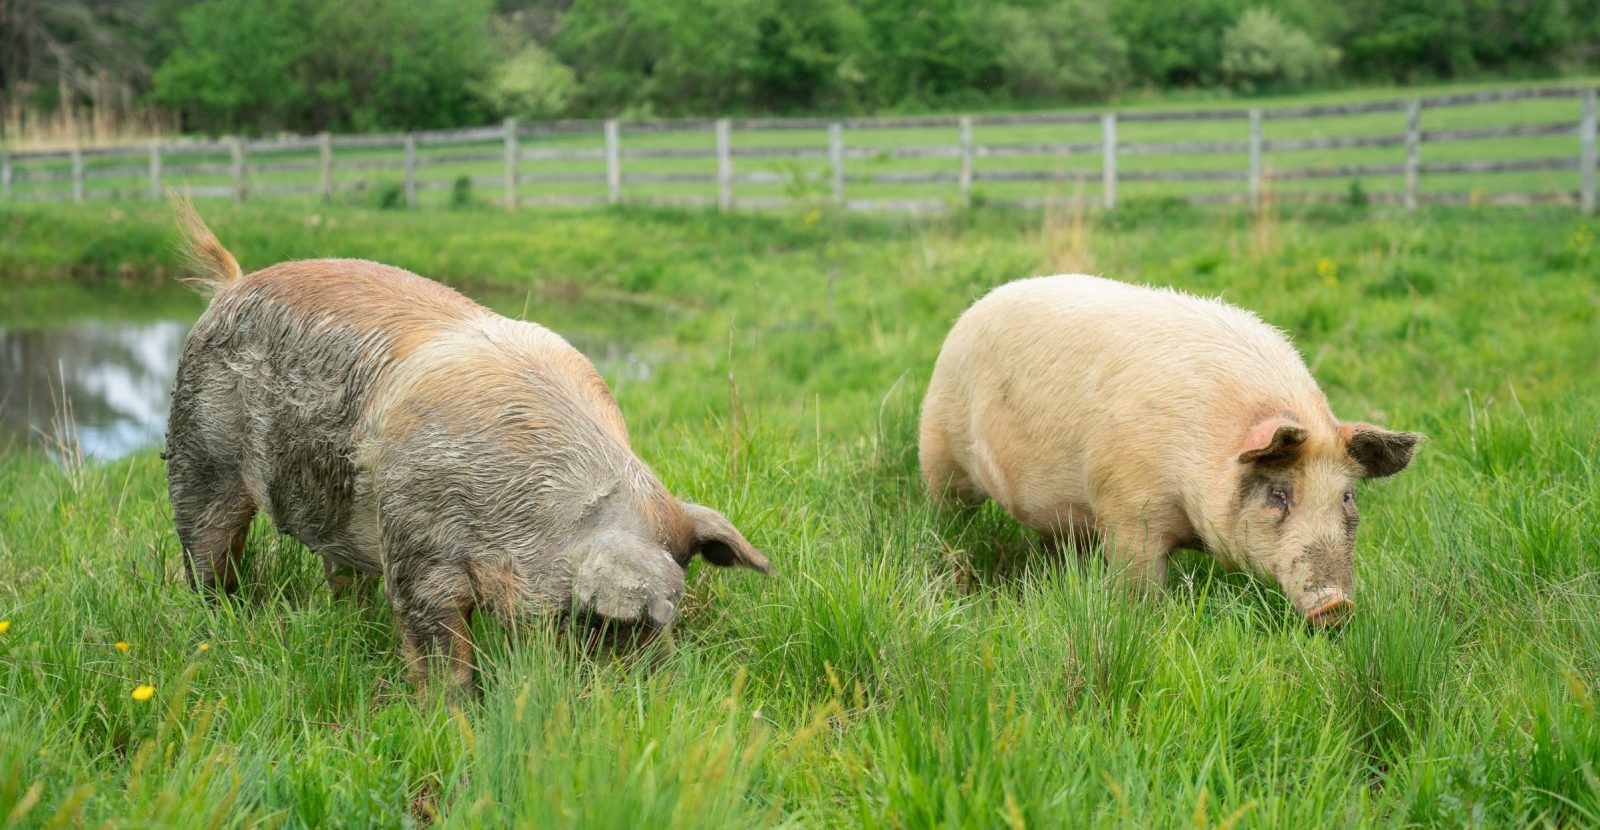 Allan and Jack pigs walk through the grass at Farm Sanctuary